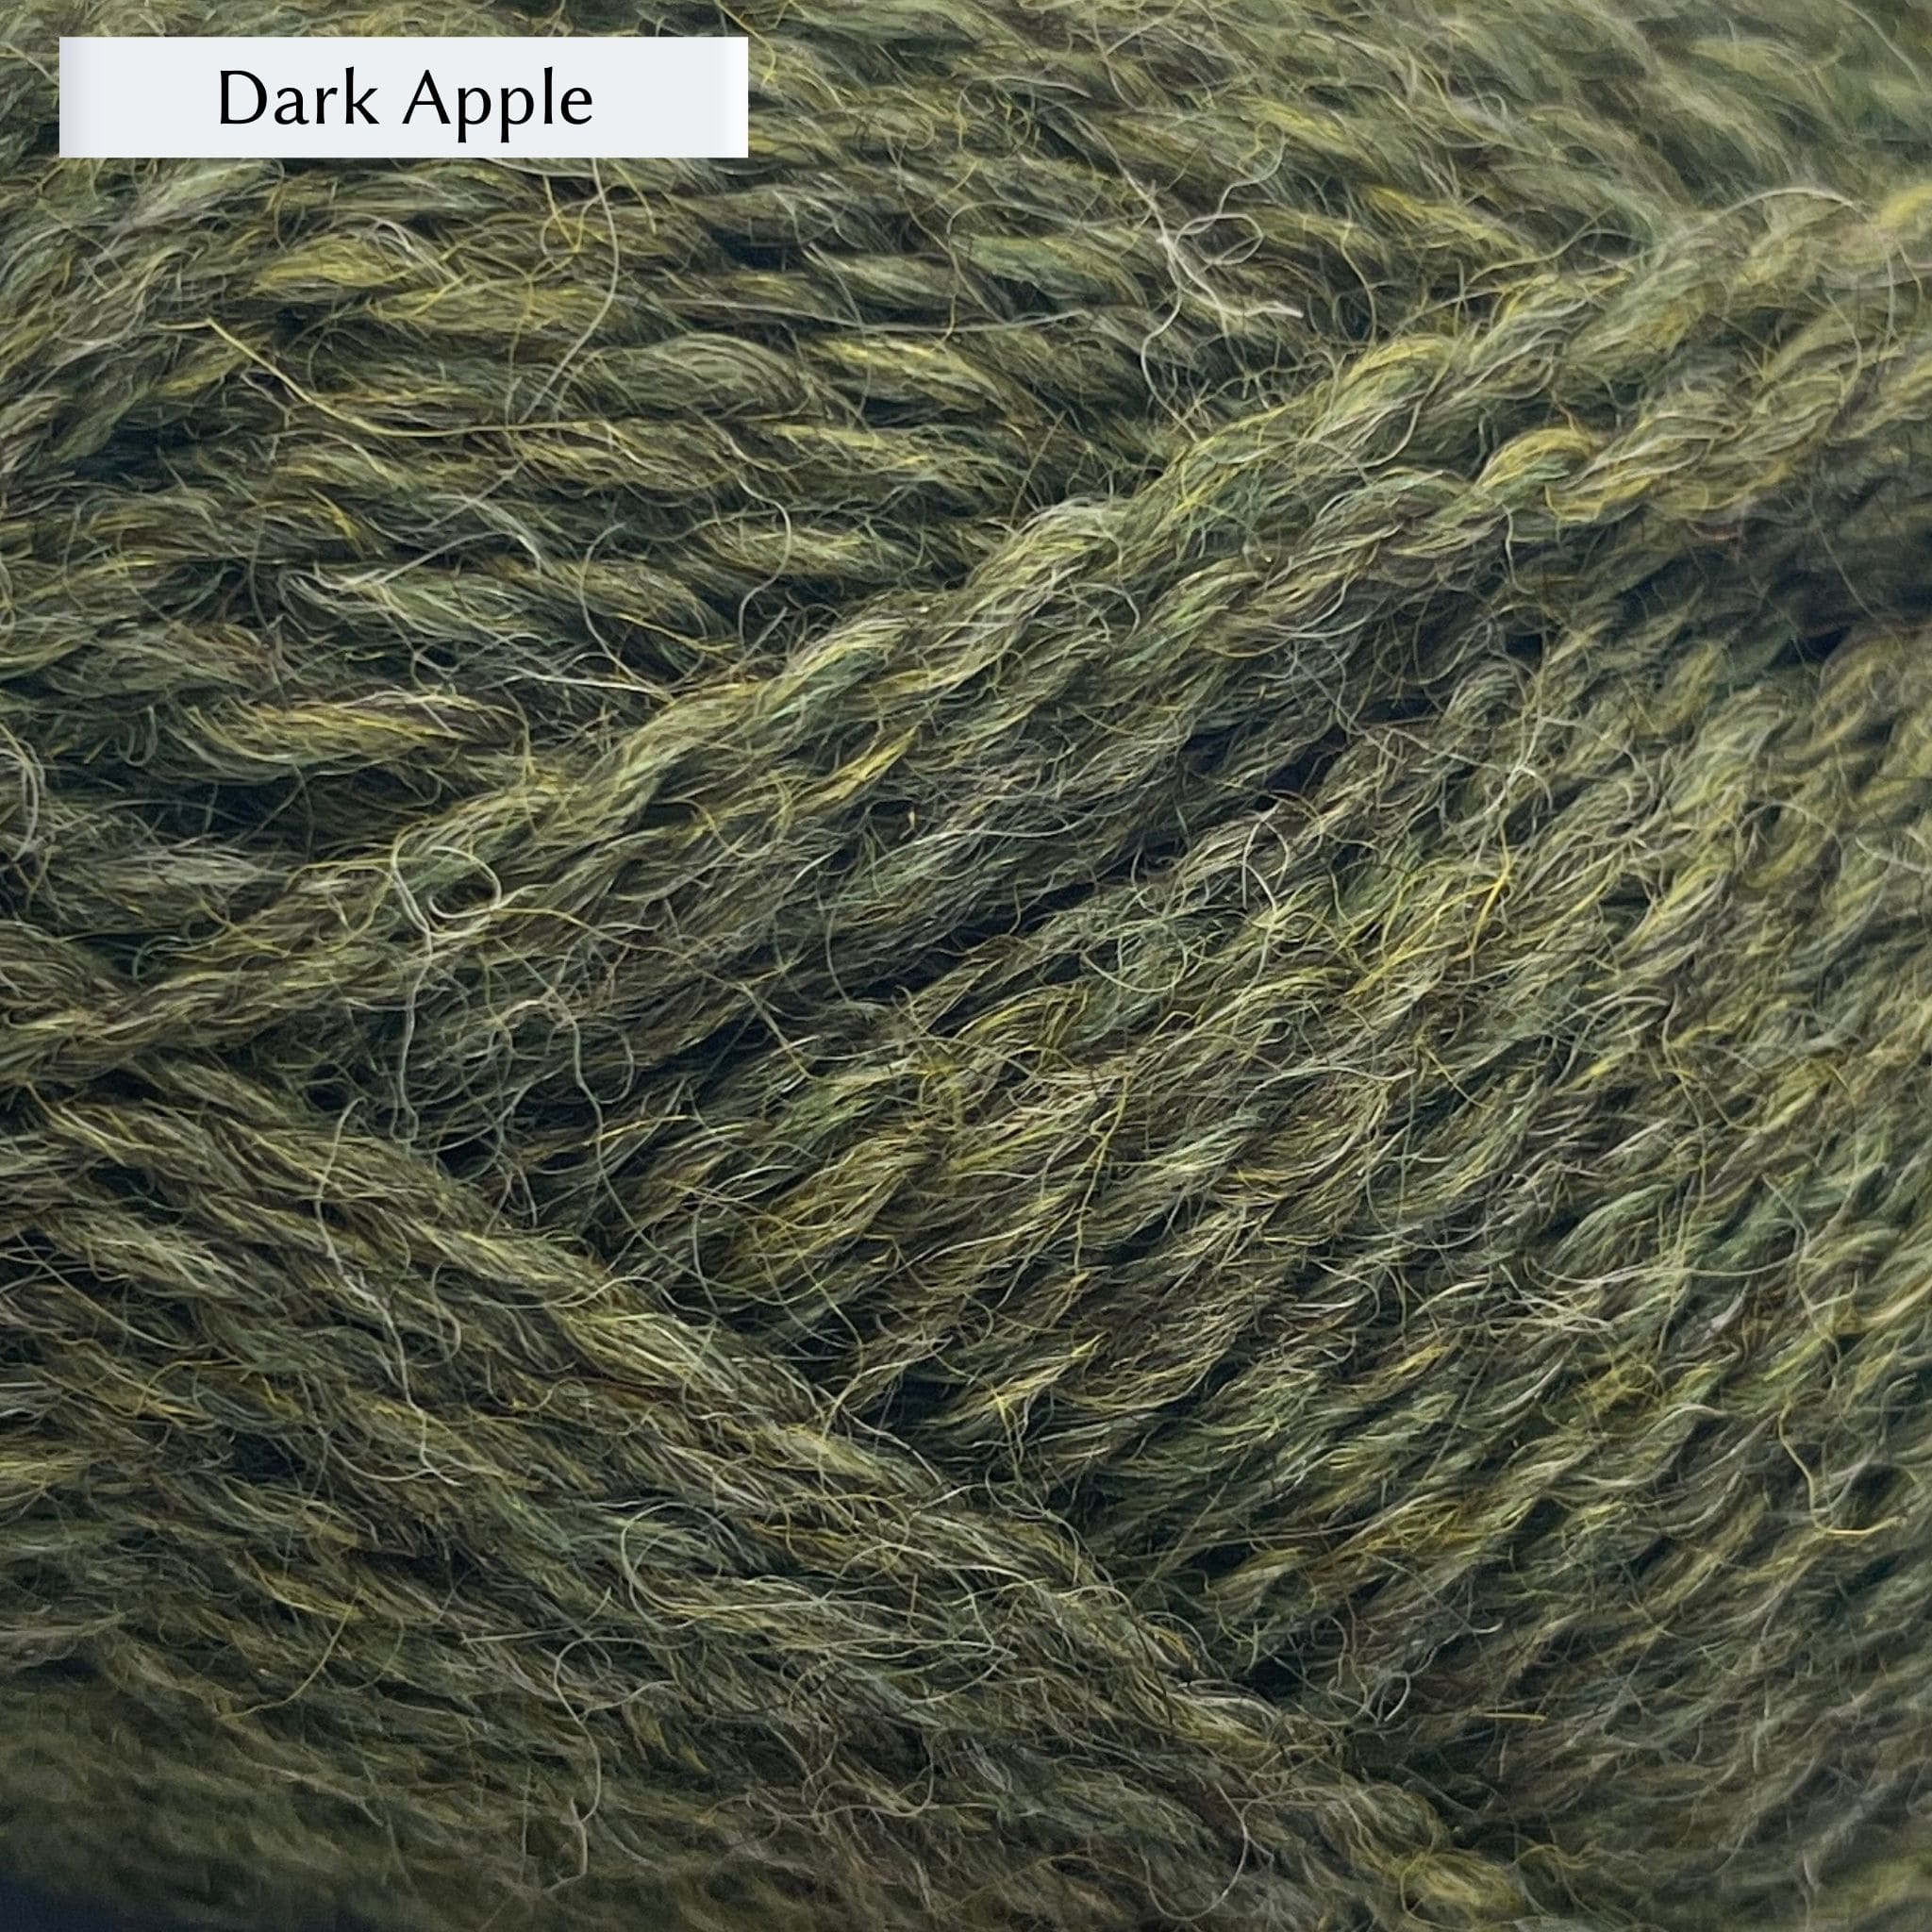 Marie Wallin's British Breeds yarn, a fingering weight, in color Dark Apple, a rich apple green